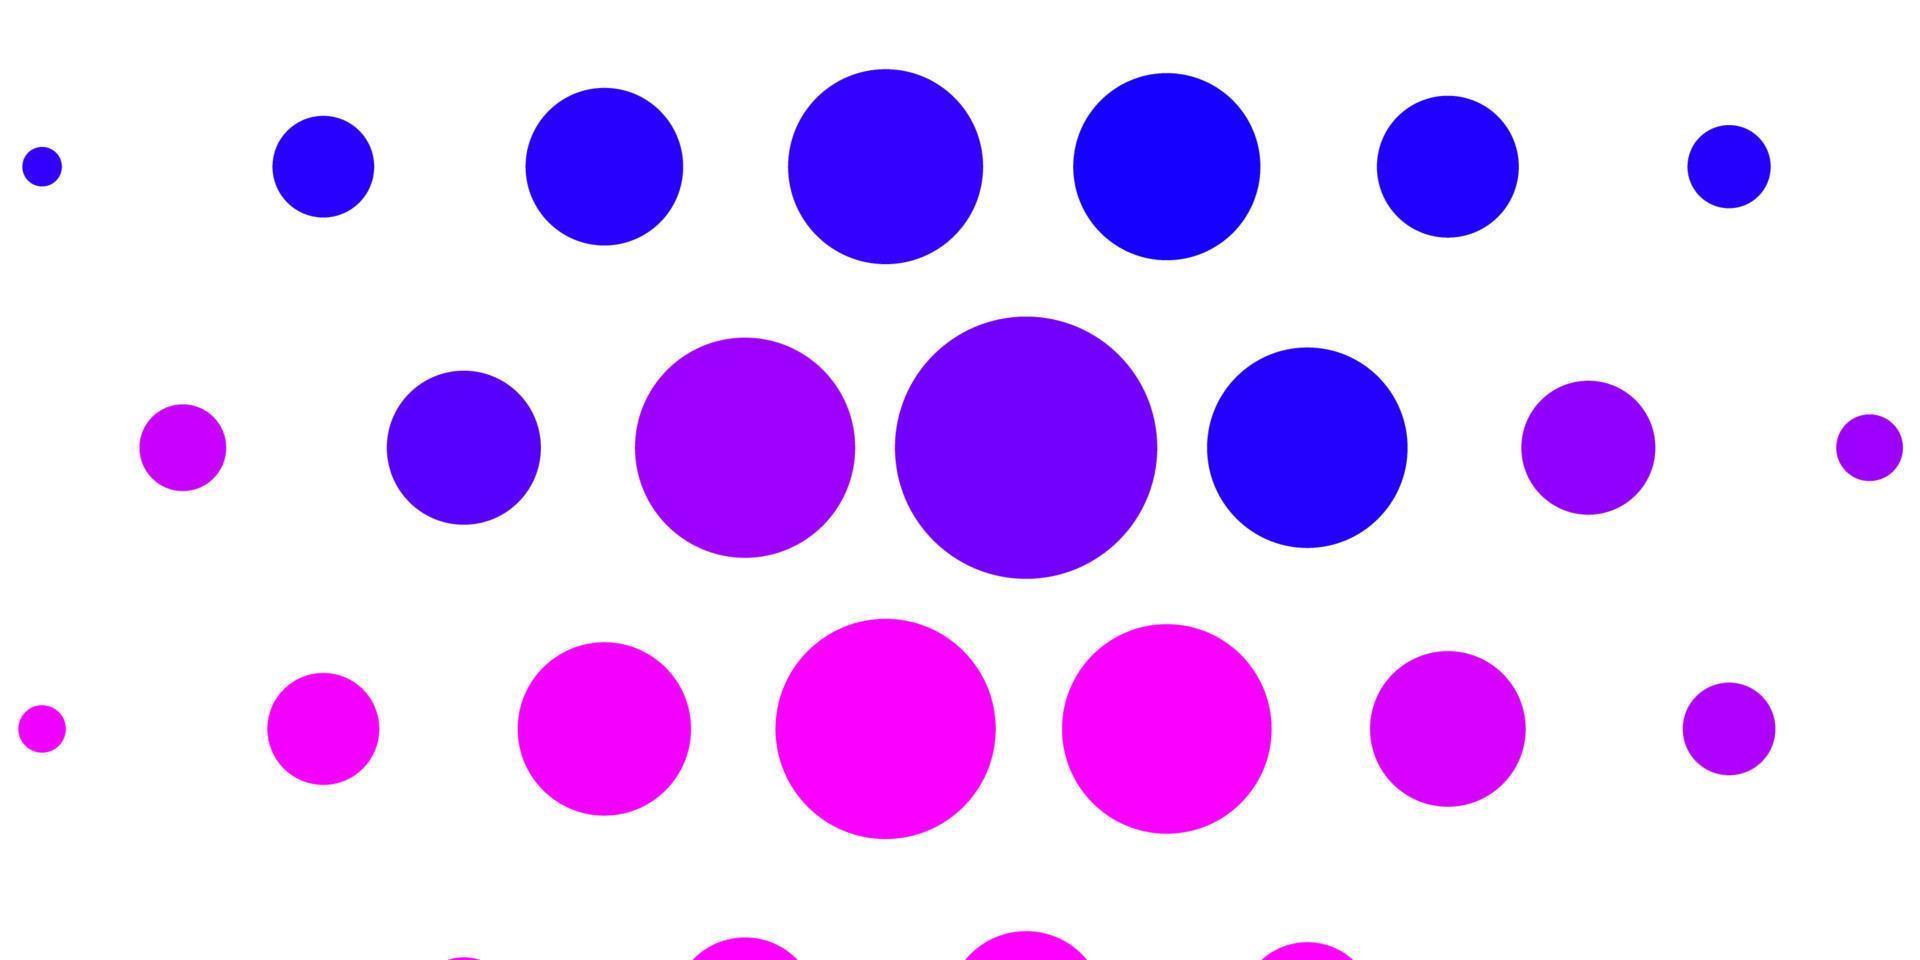 hellpurpurner, rosa Vektorhintergrund mit Kreisen. vektor